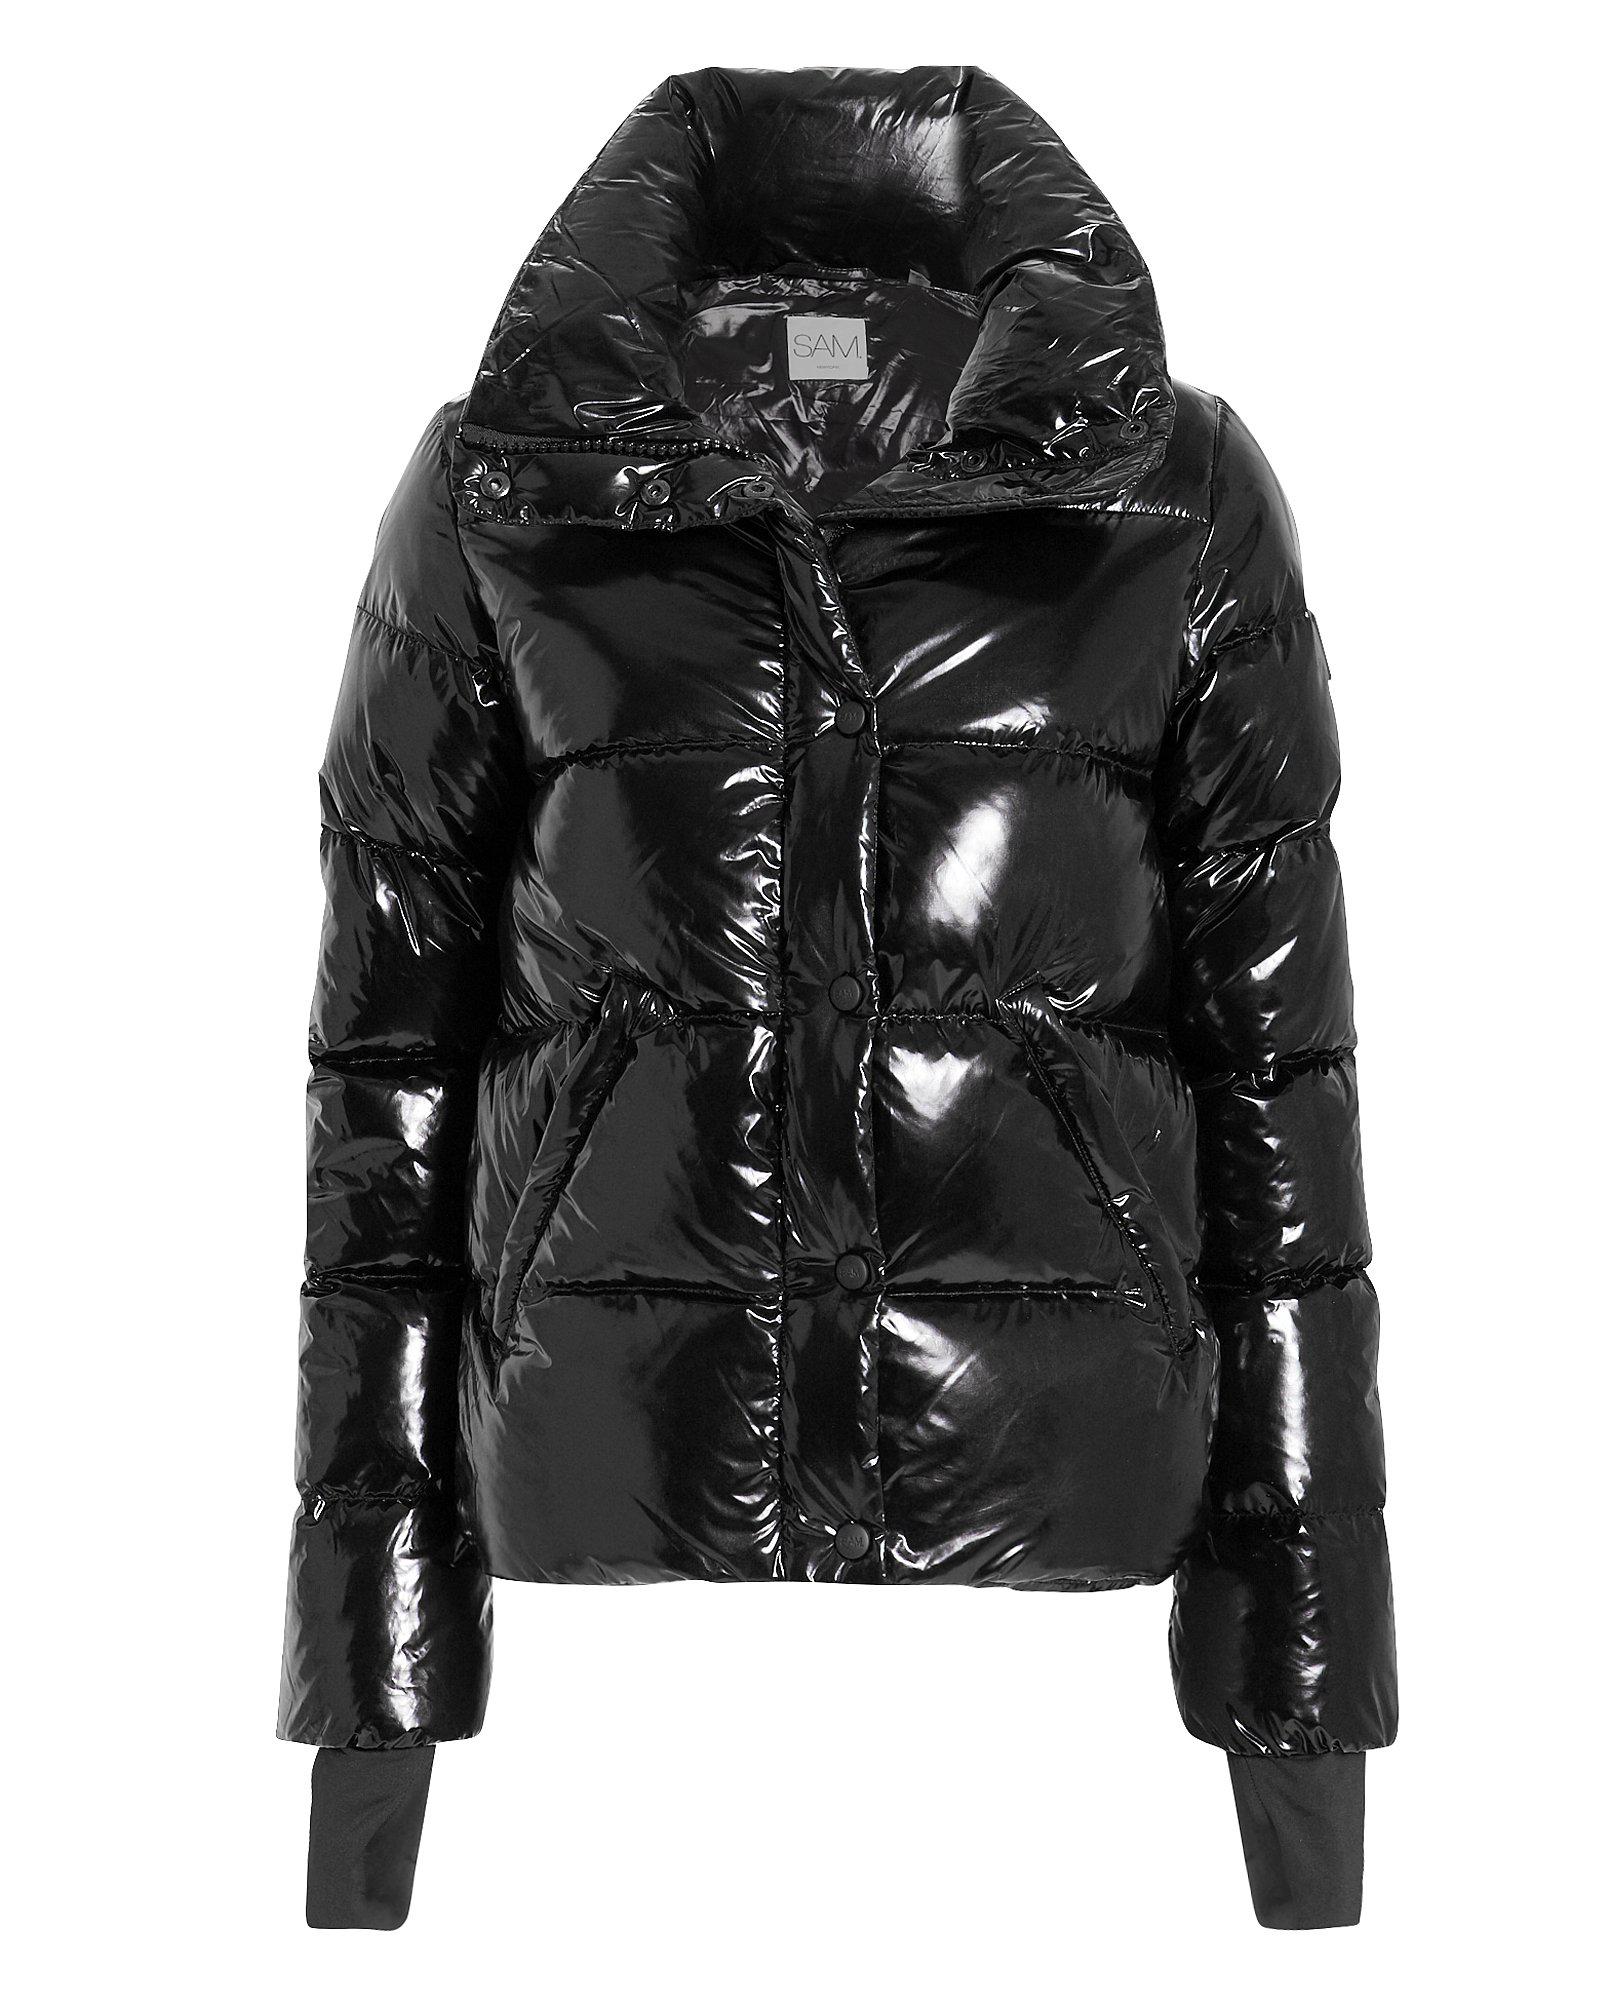 Lyst - Sam. Isabel Oversized Puffer Jacket in Black